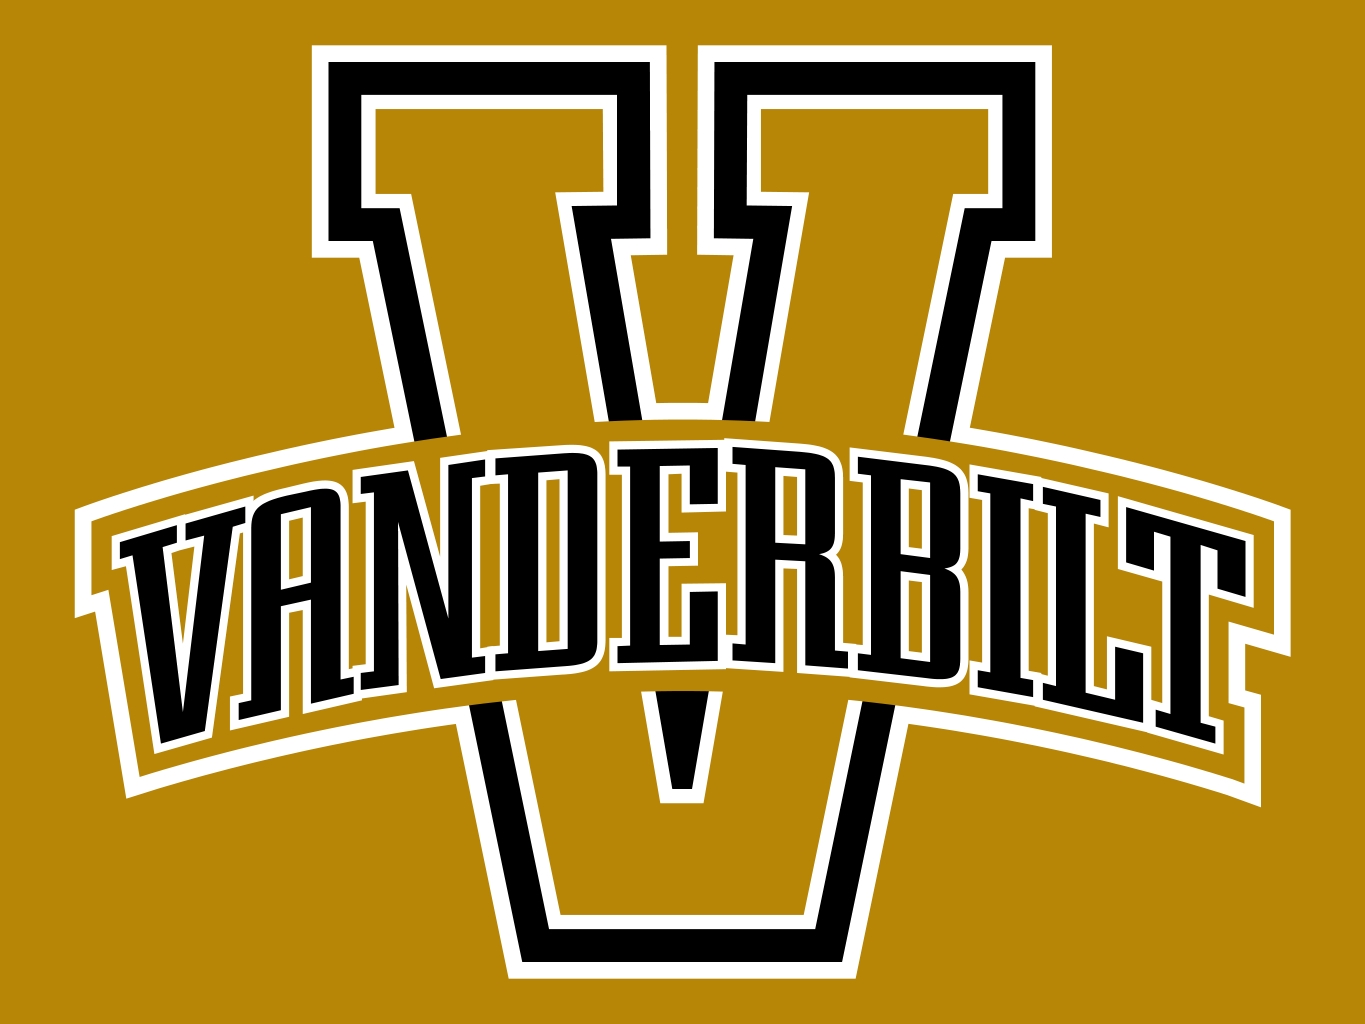 Vanderbilt University Logo photo - 1